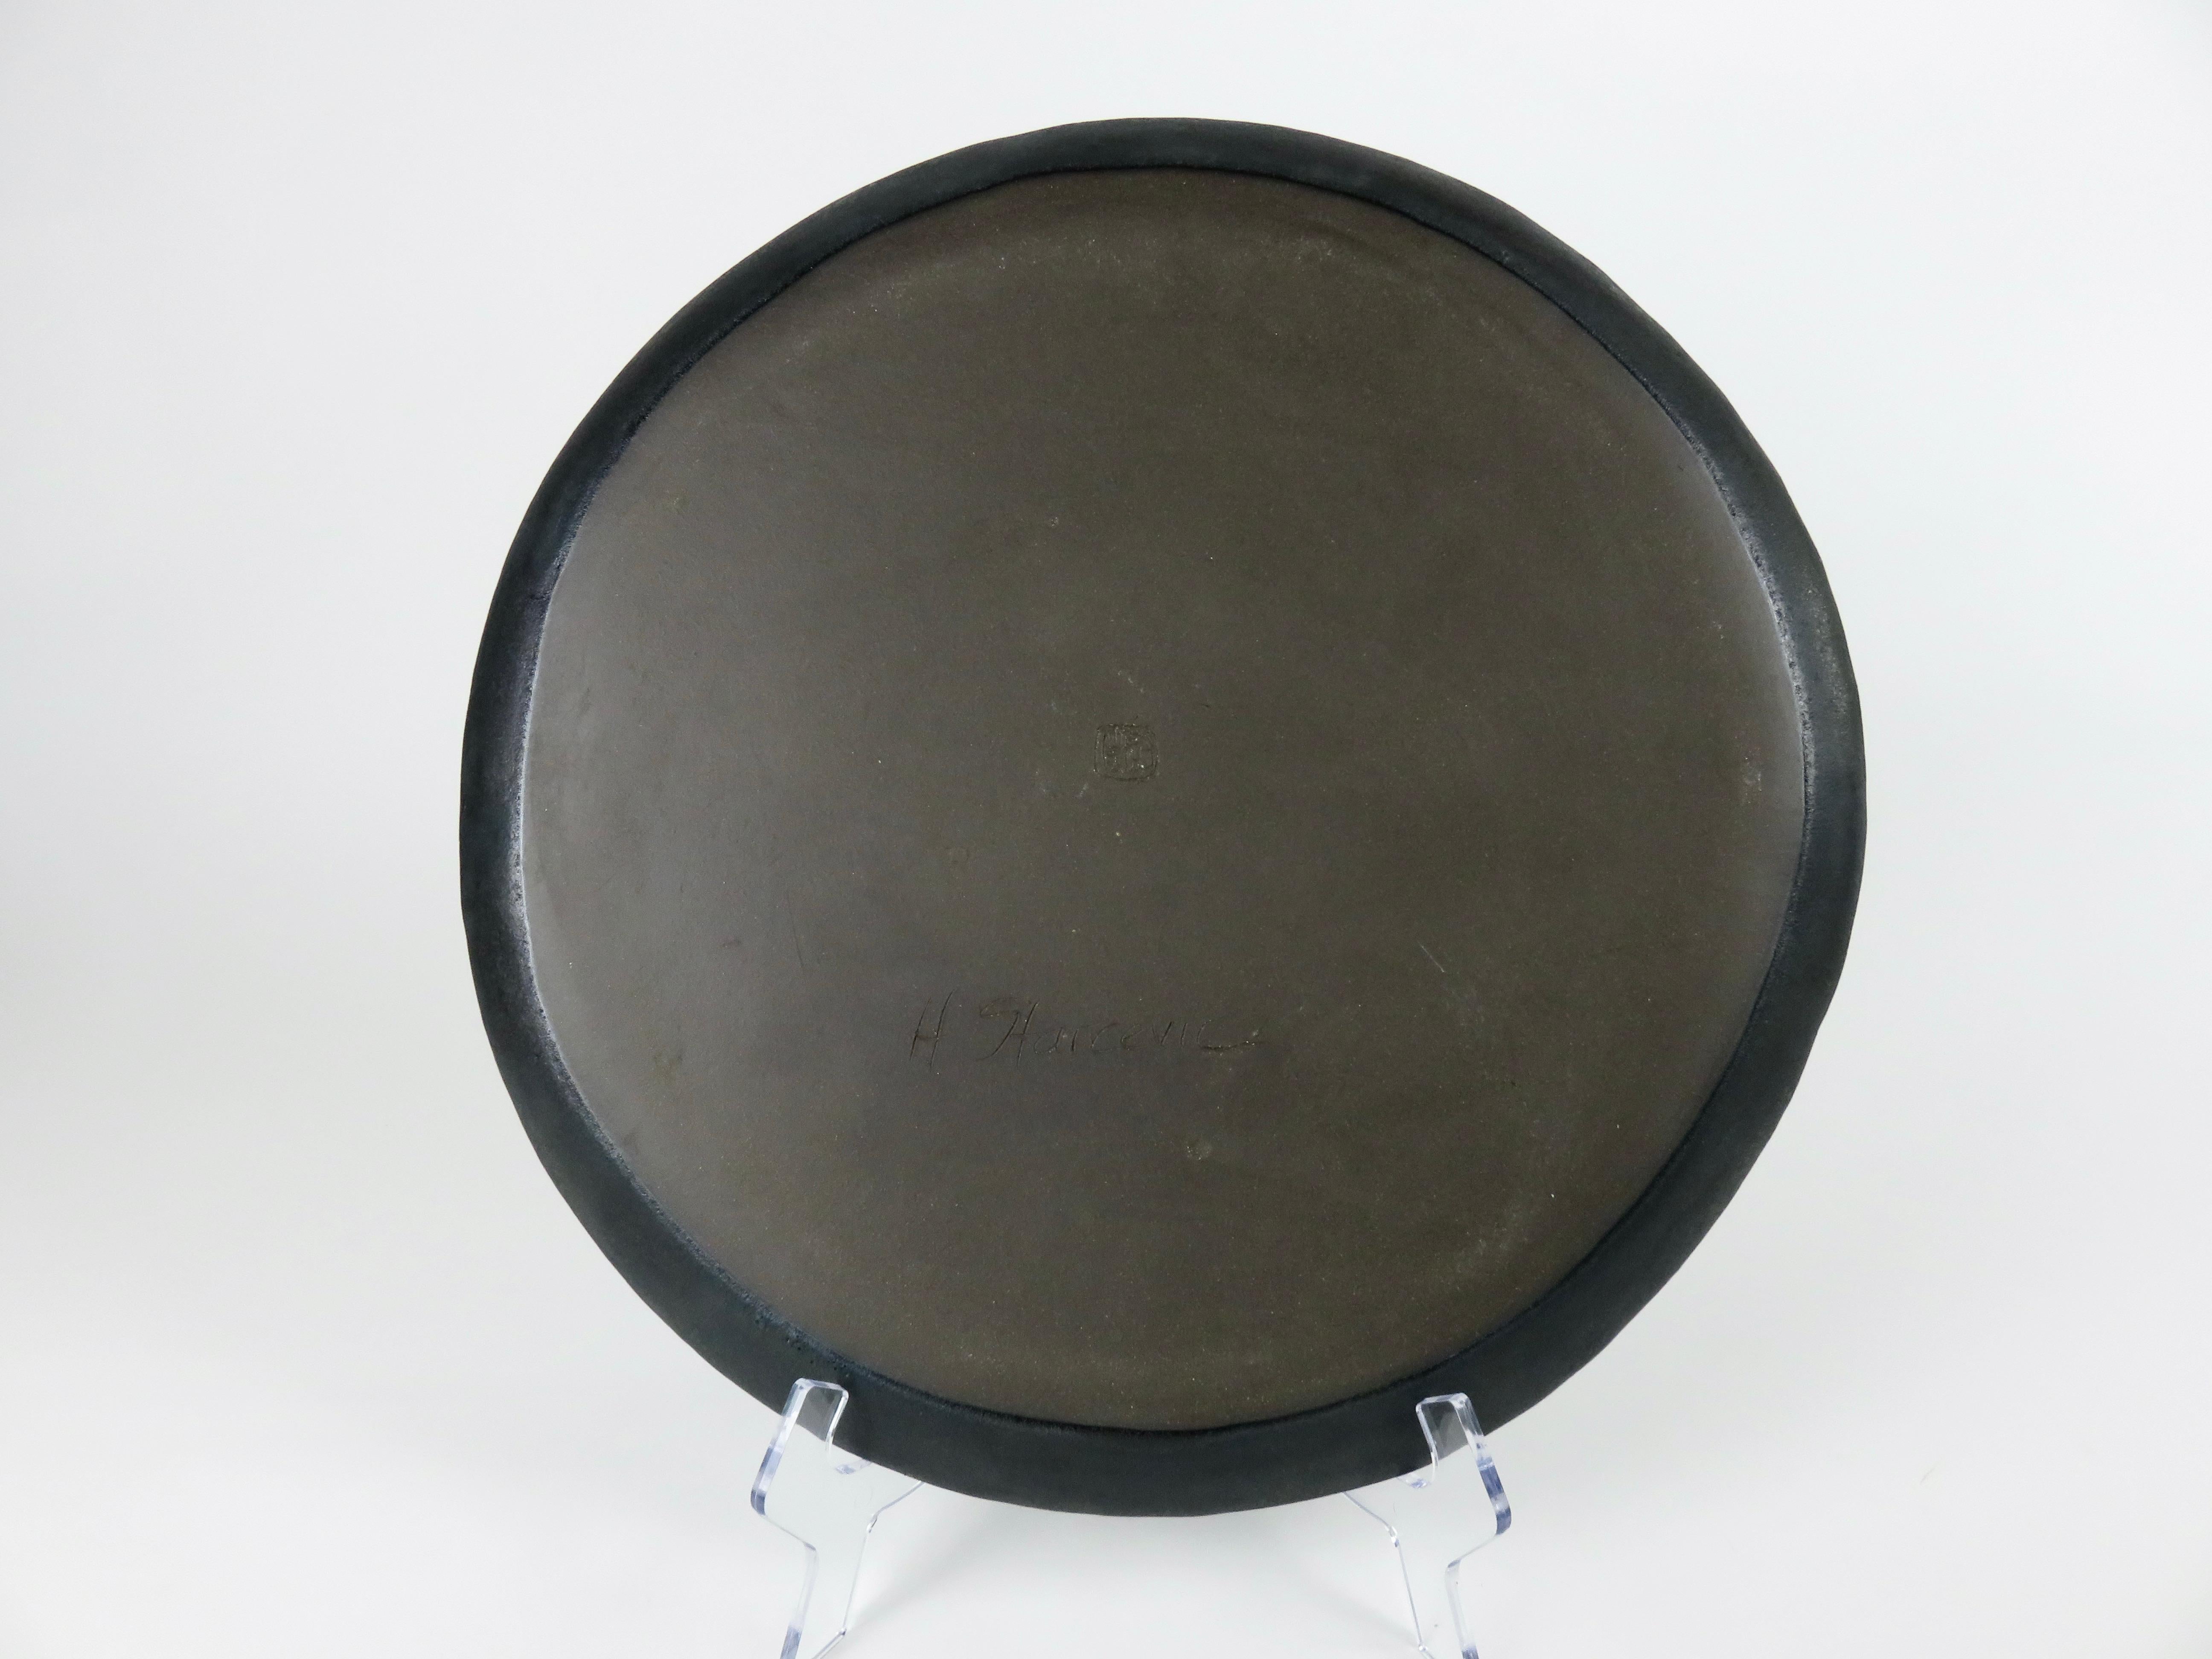 Large Flat Black Hand Built Ceramic Platter with Metallic Details For Sale 2